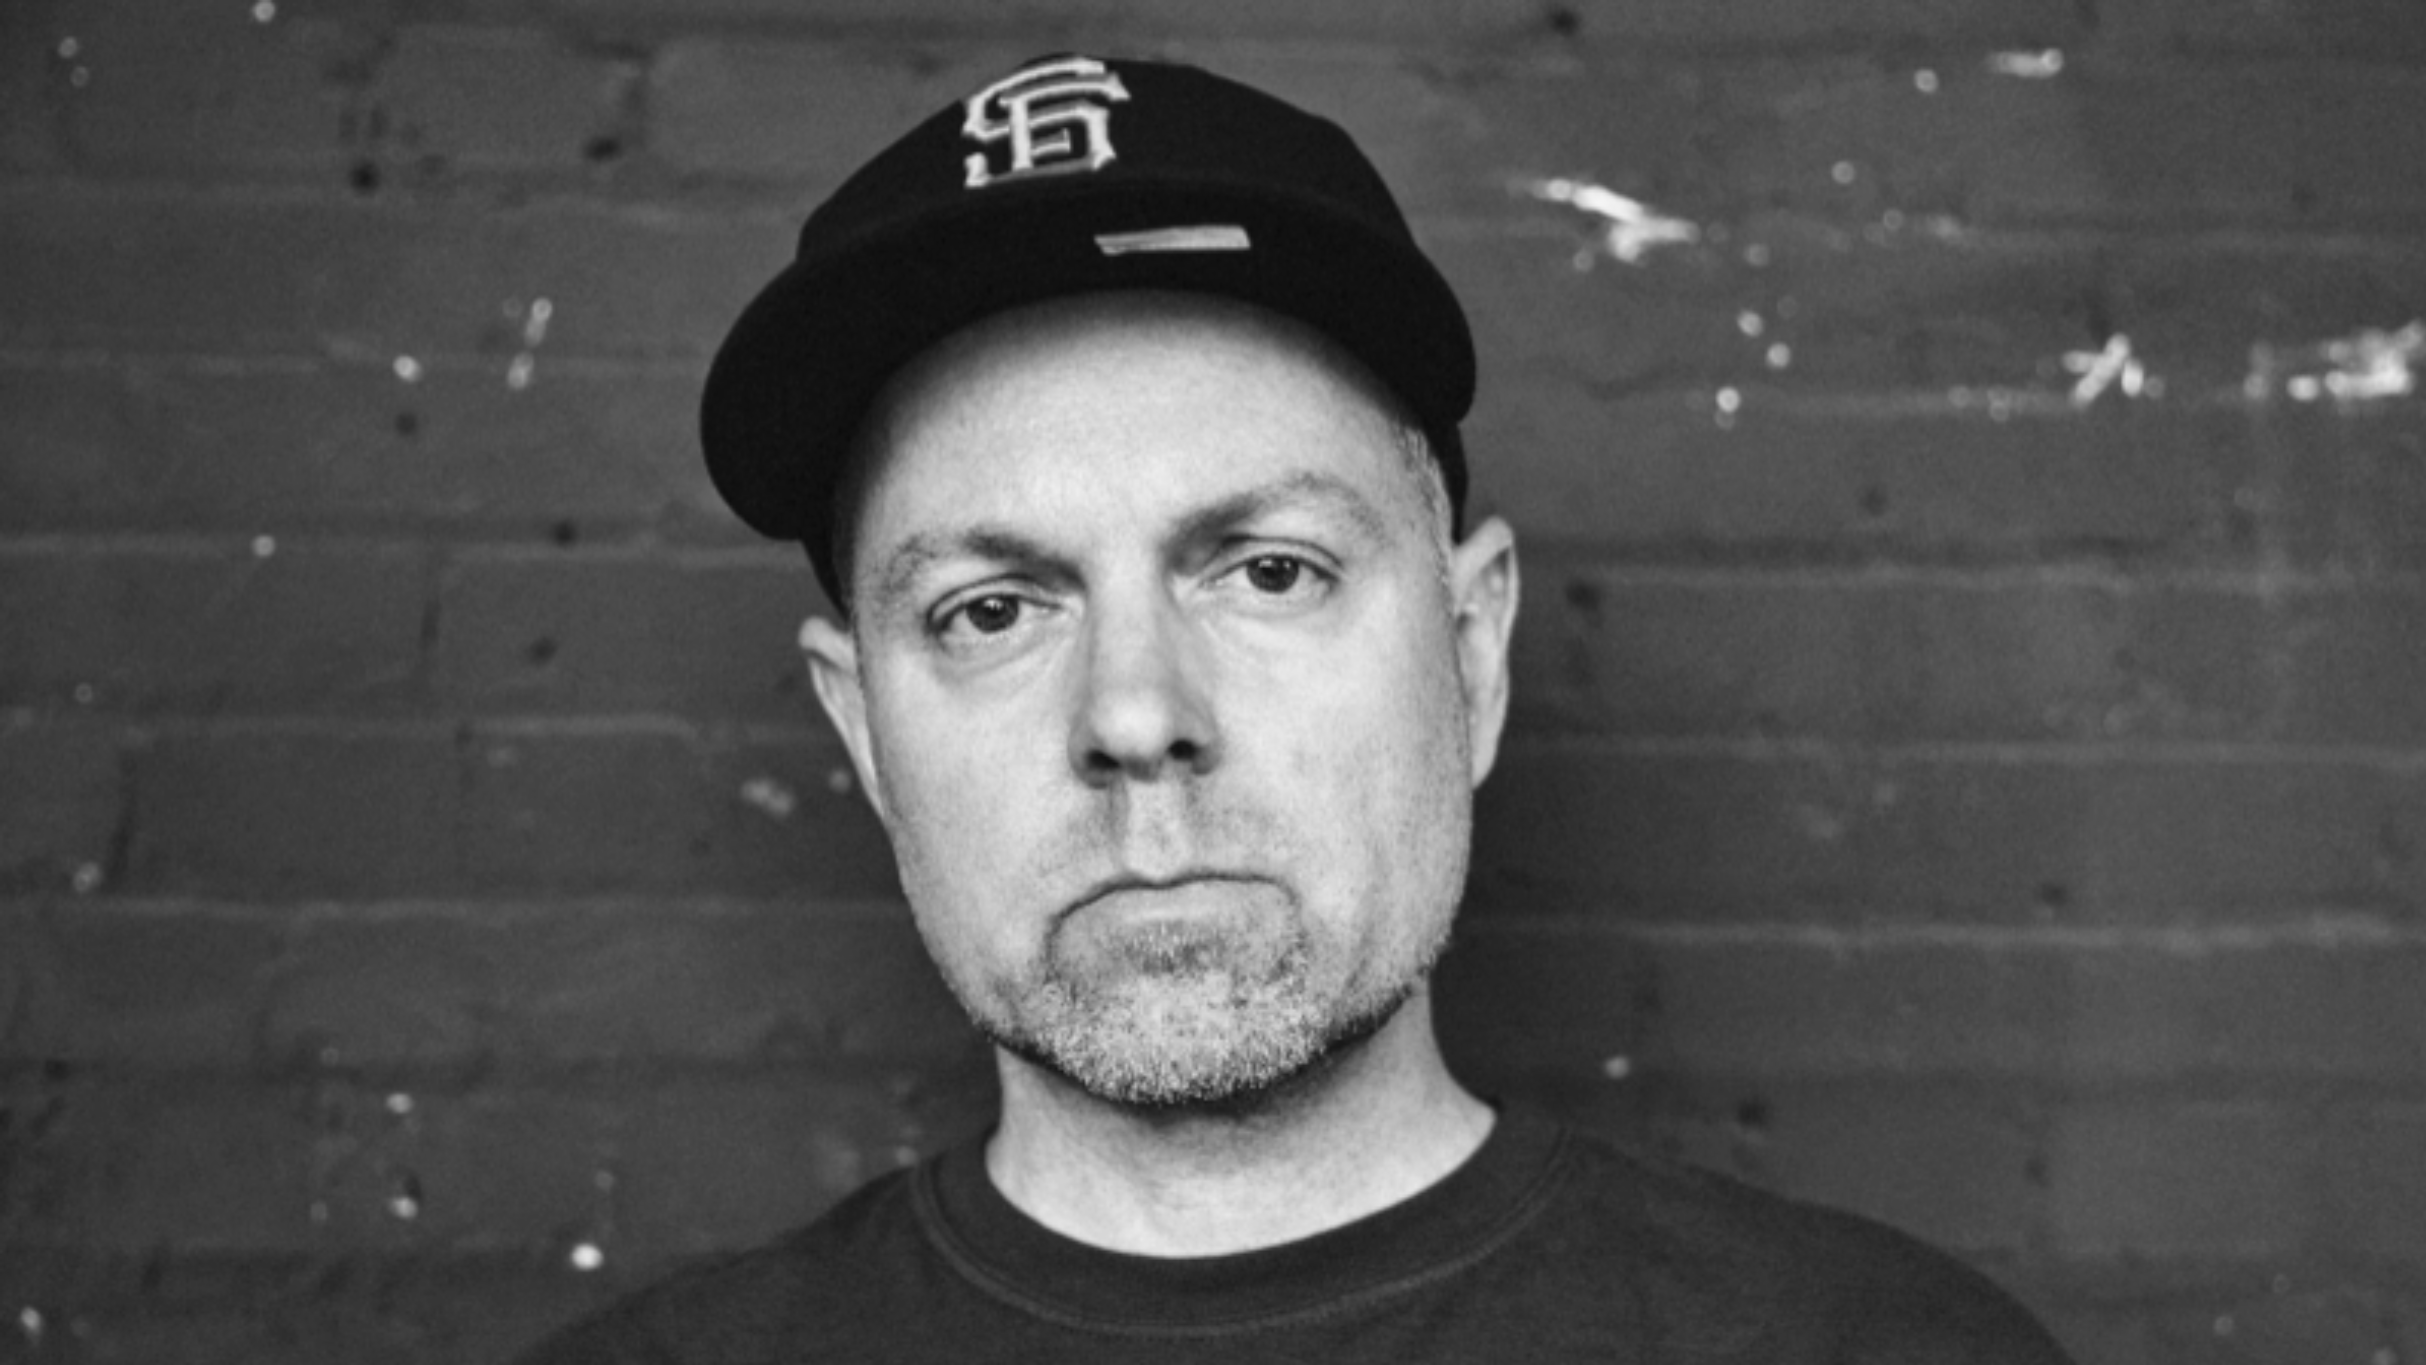 DJ Shadow in Dublin promo photo for Artist presale offer code